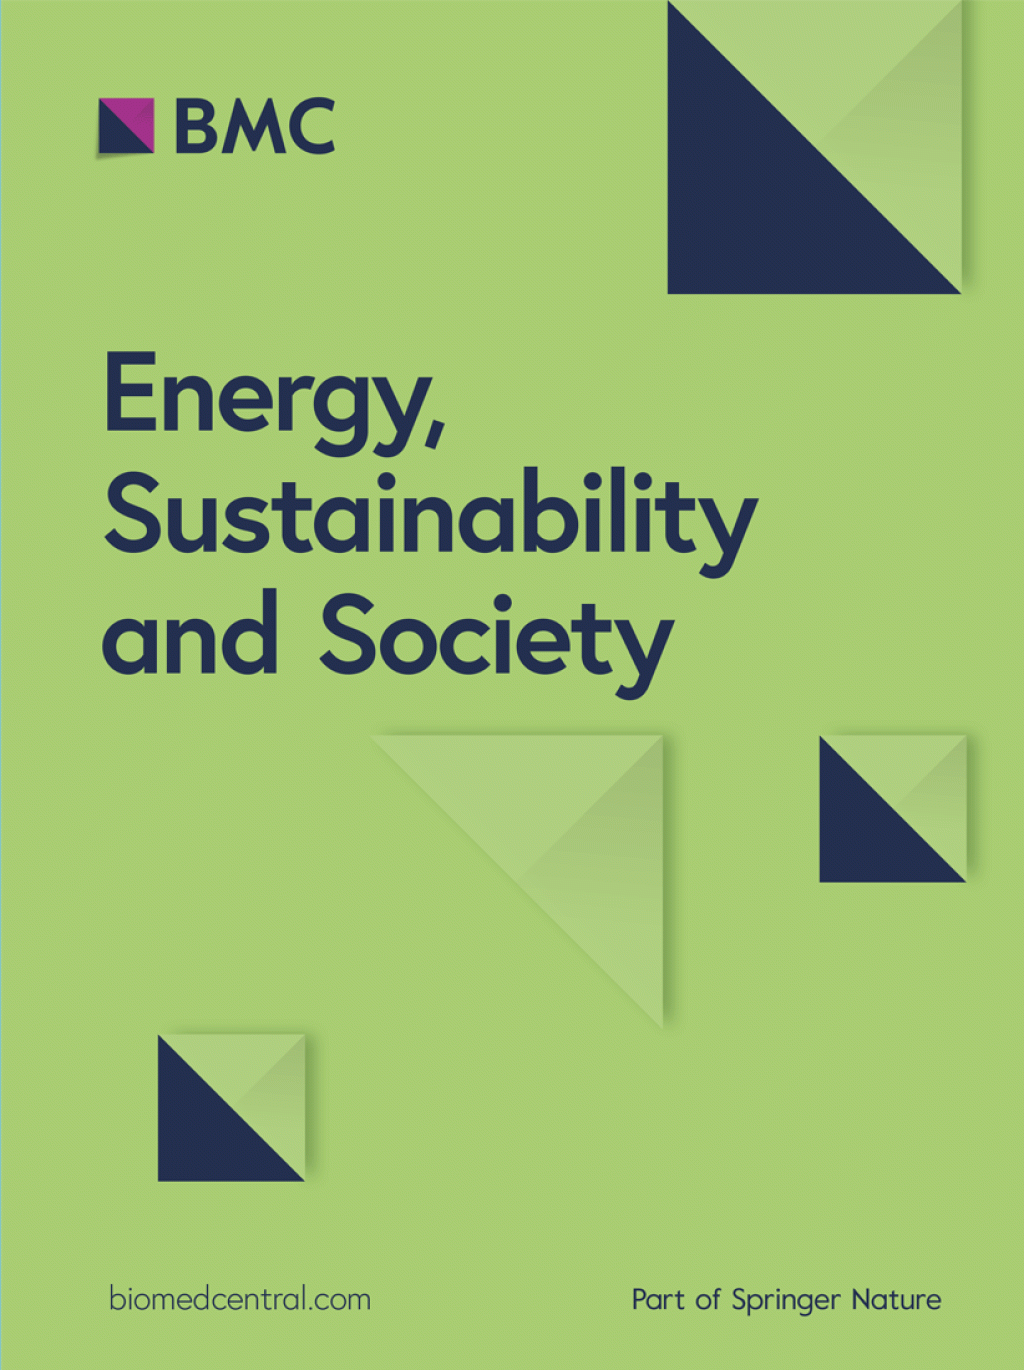 EnergySustainabilitySociety